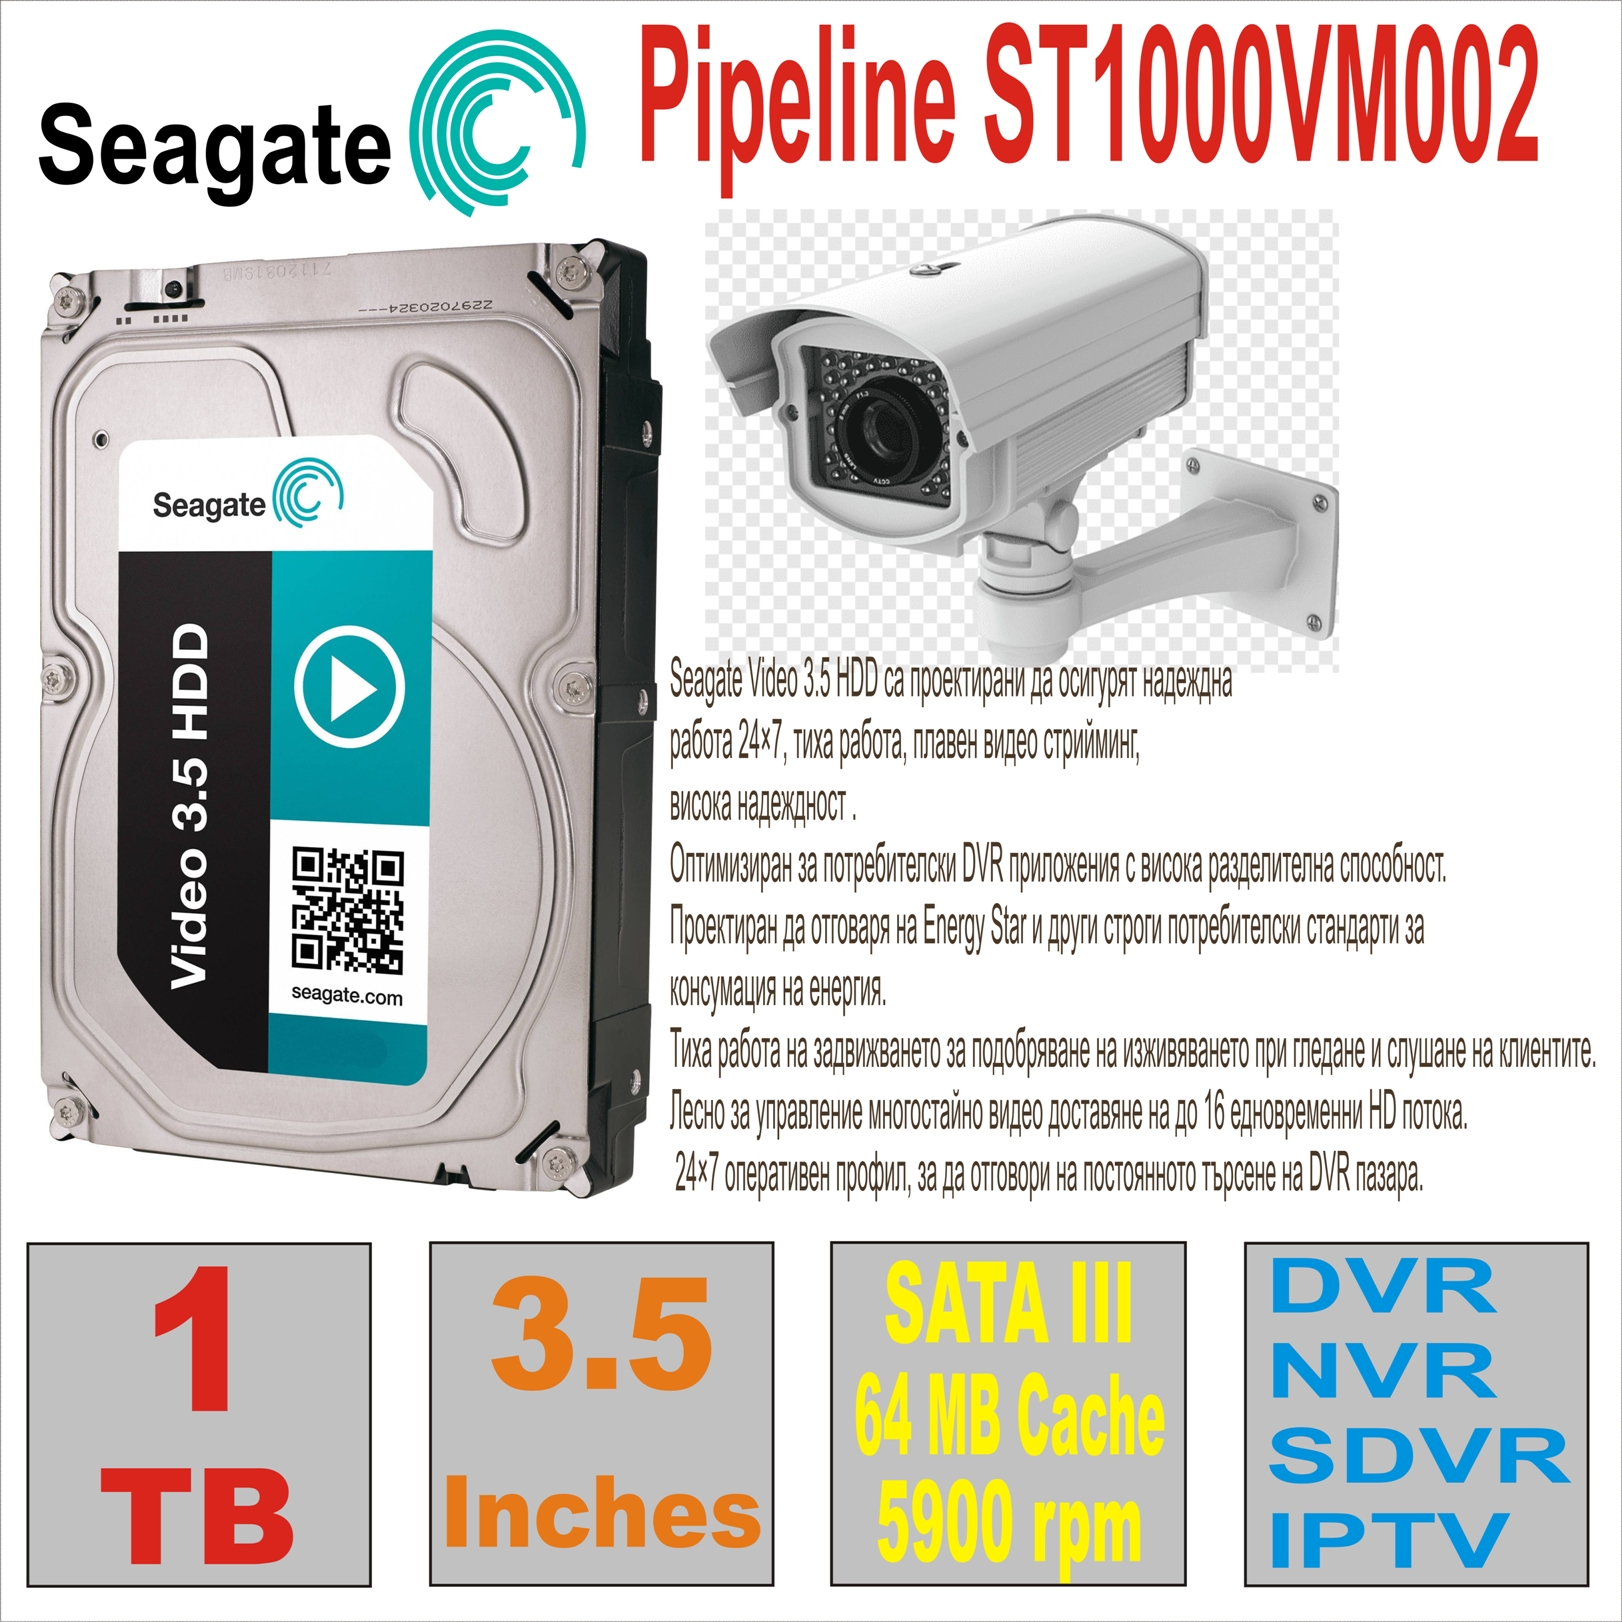 HDD 3.5` 1 TB SEAGATE Pipeline ST1000VM002